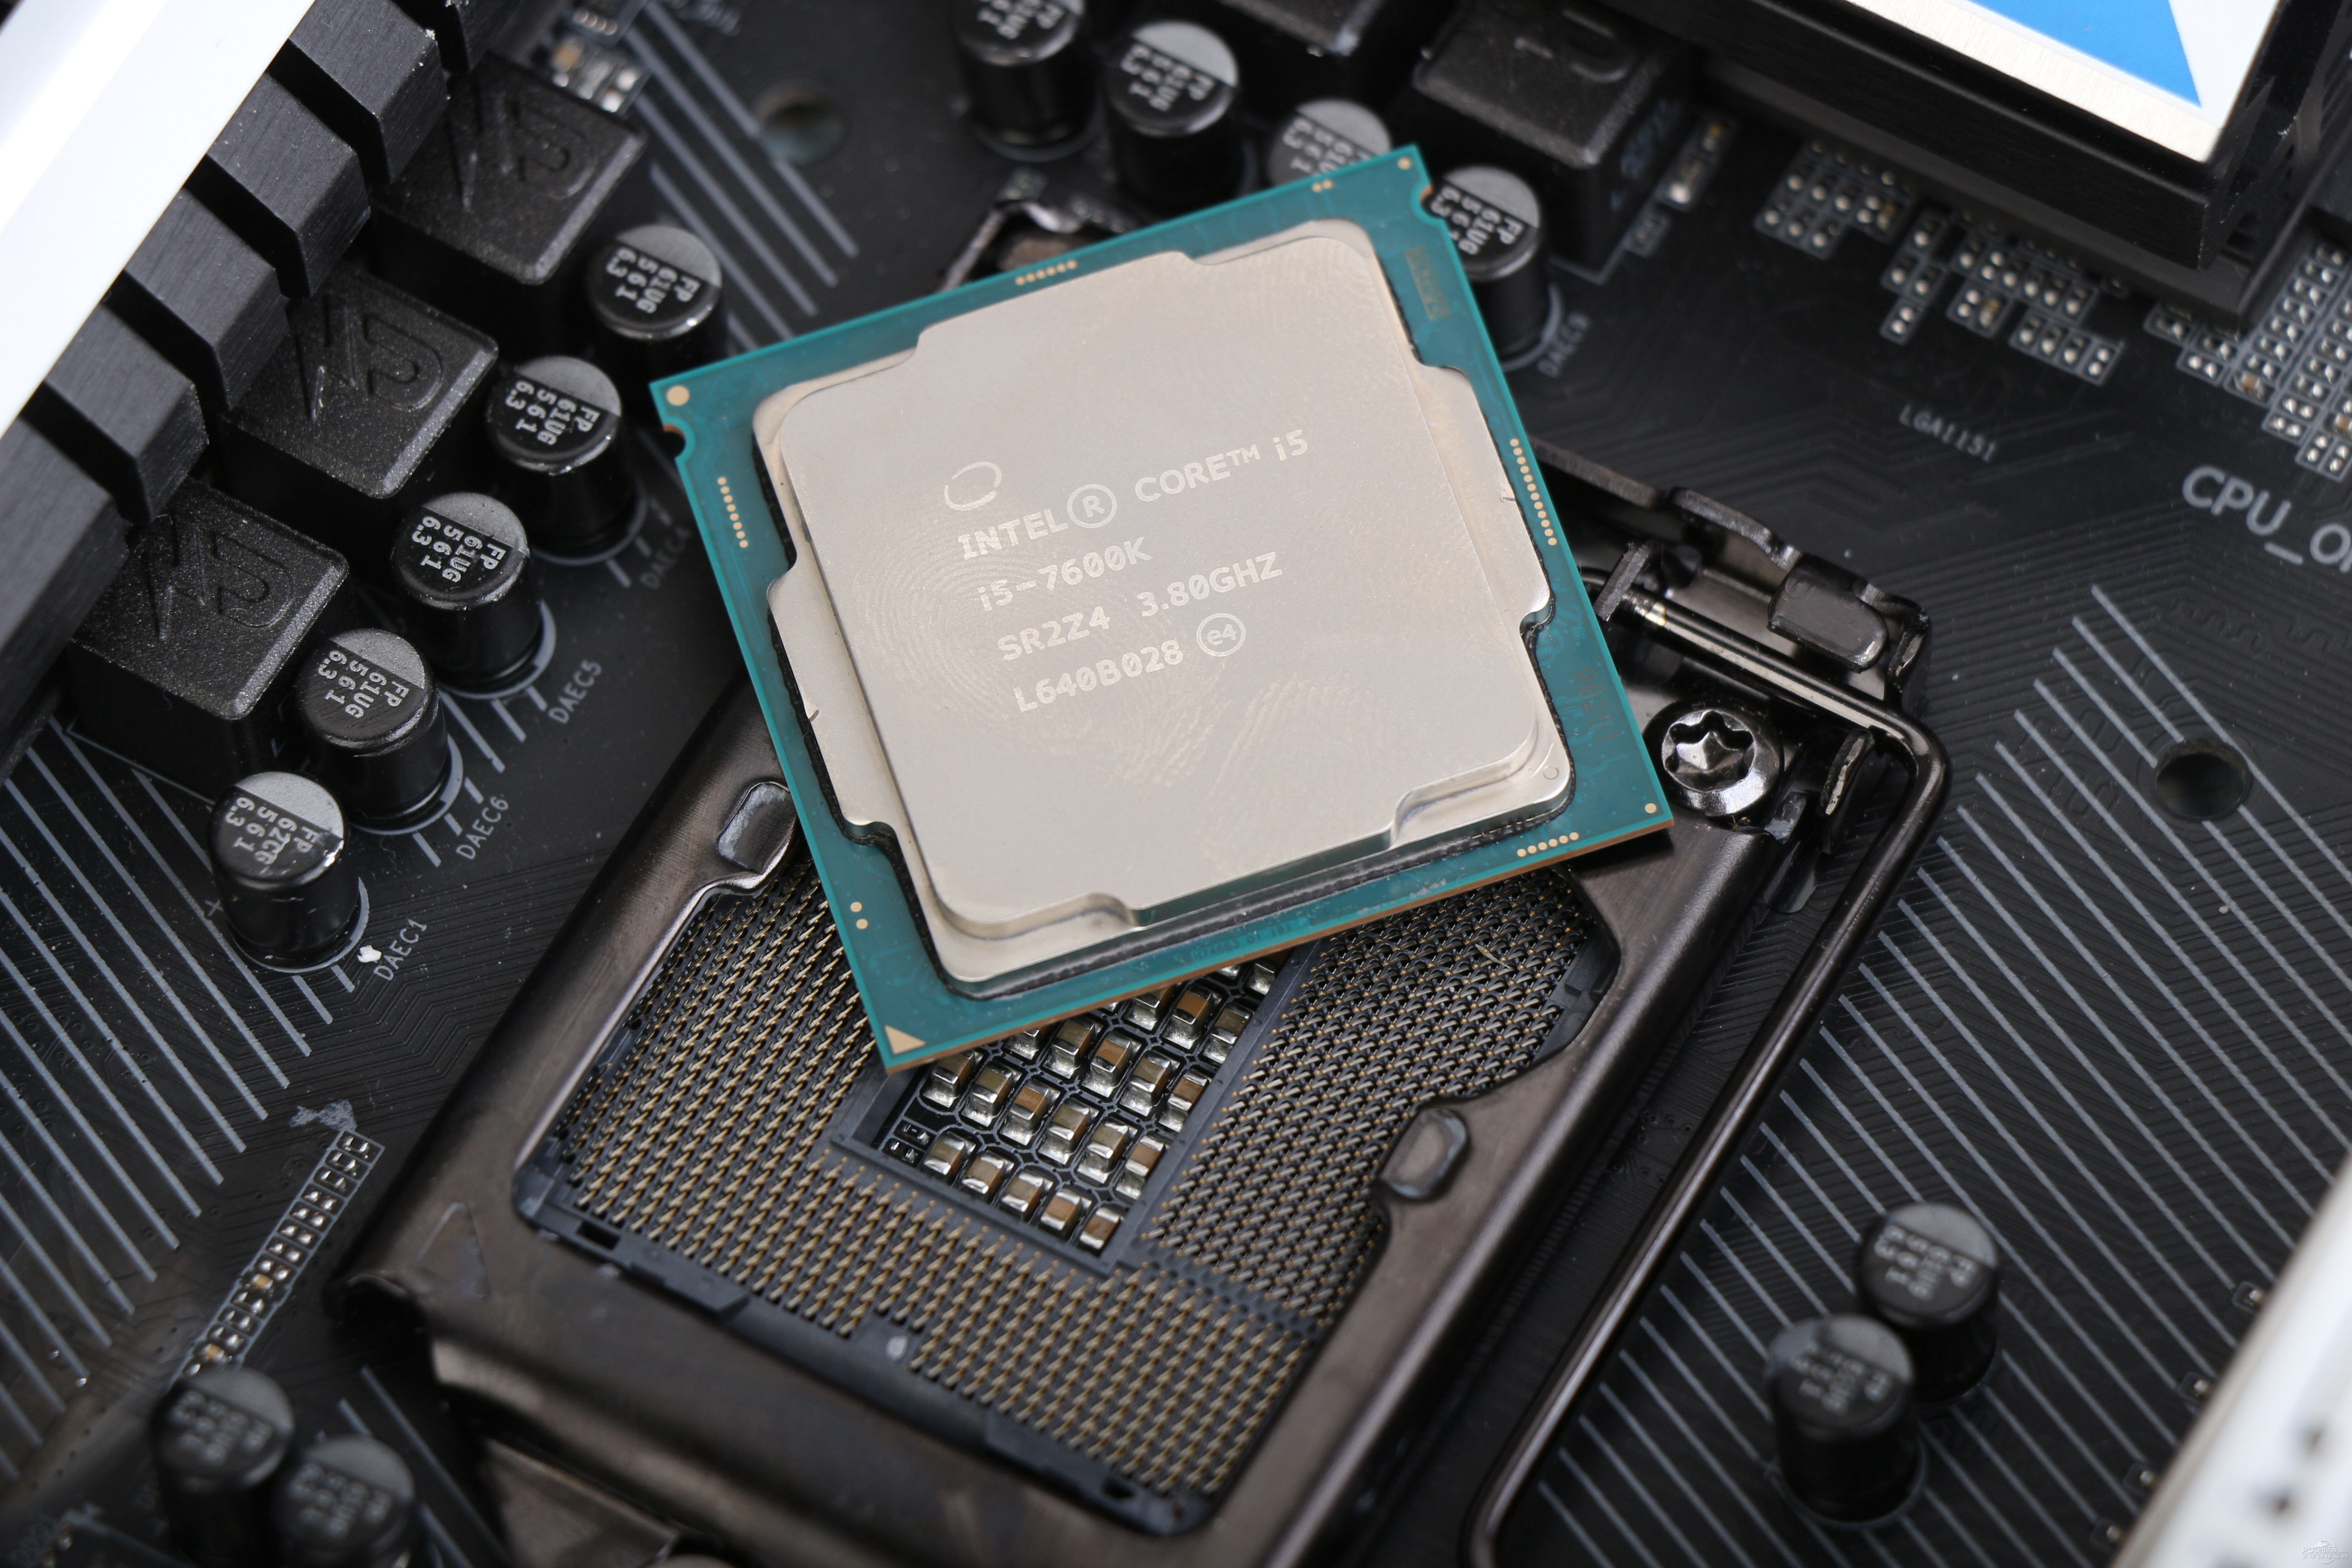 intel i5 2320 processor